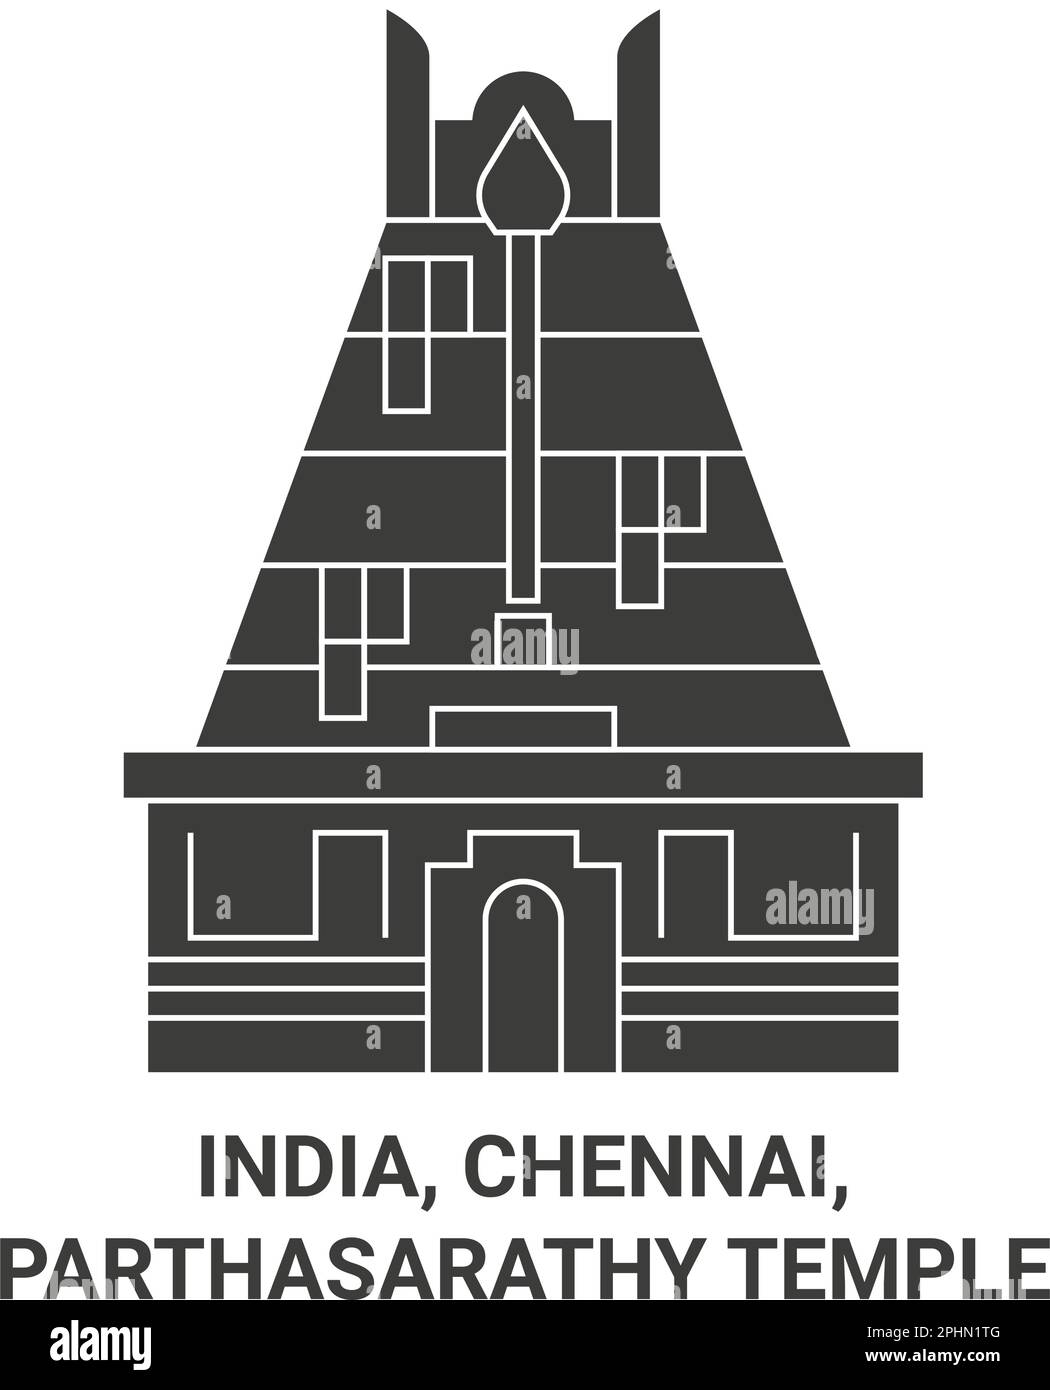 India, Chennai, Parthasarathy Temple travel landmark vector illustration Stock Vector